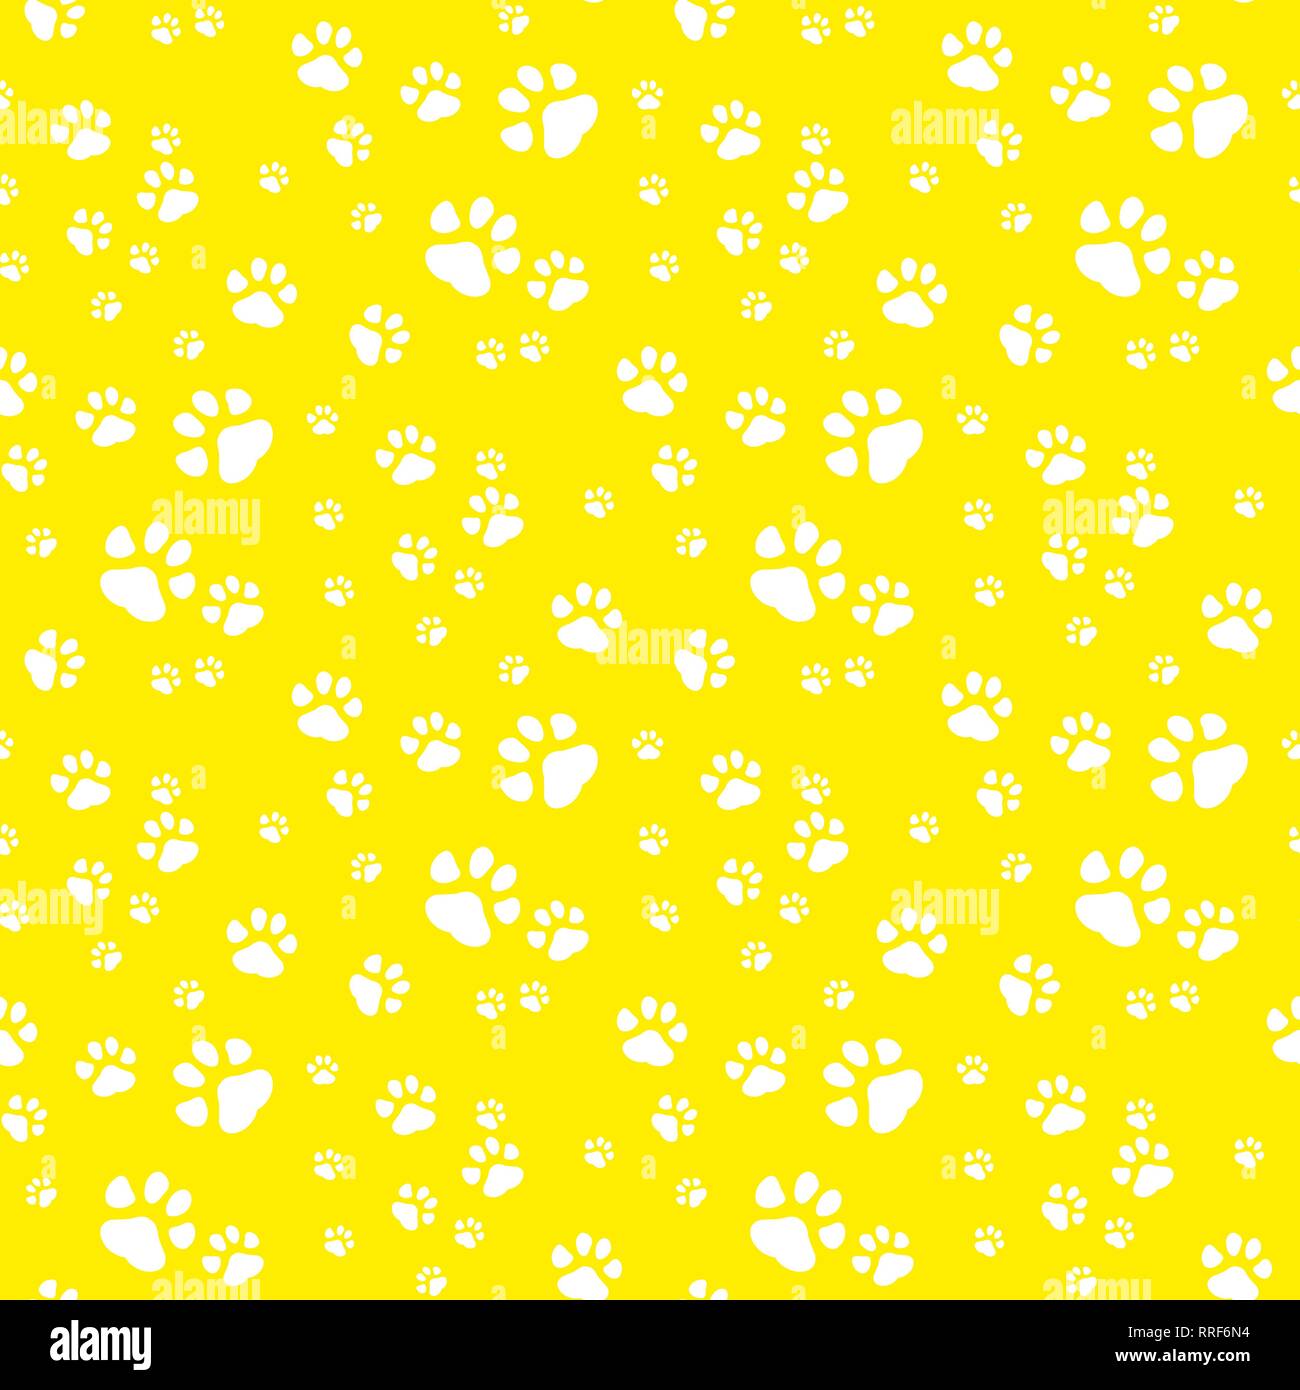 Dog paw print seamless pattern on white background eps10 Stock Vector Image  & Art - Alamy